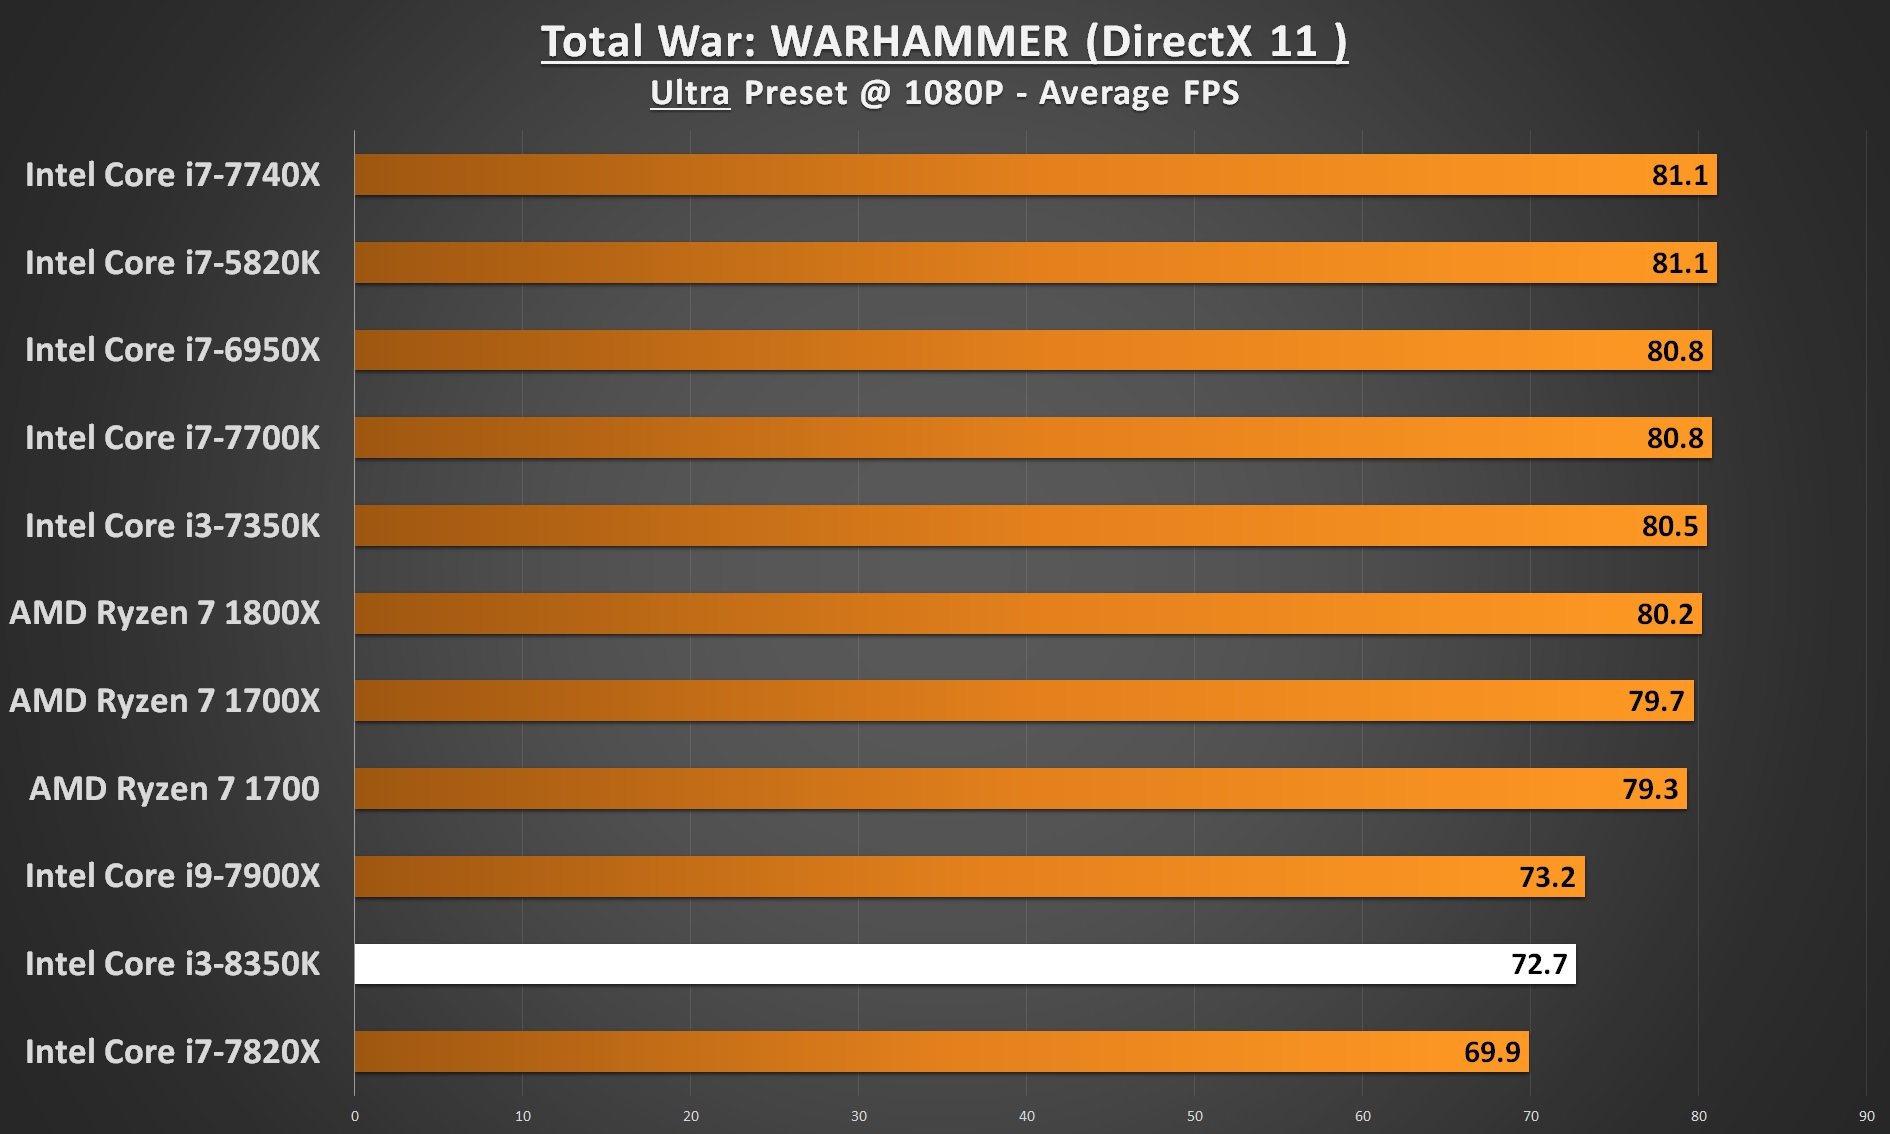 Intel Core i3-8350 Performance - Total War WARHAMMER 1080p